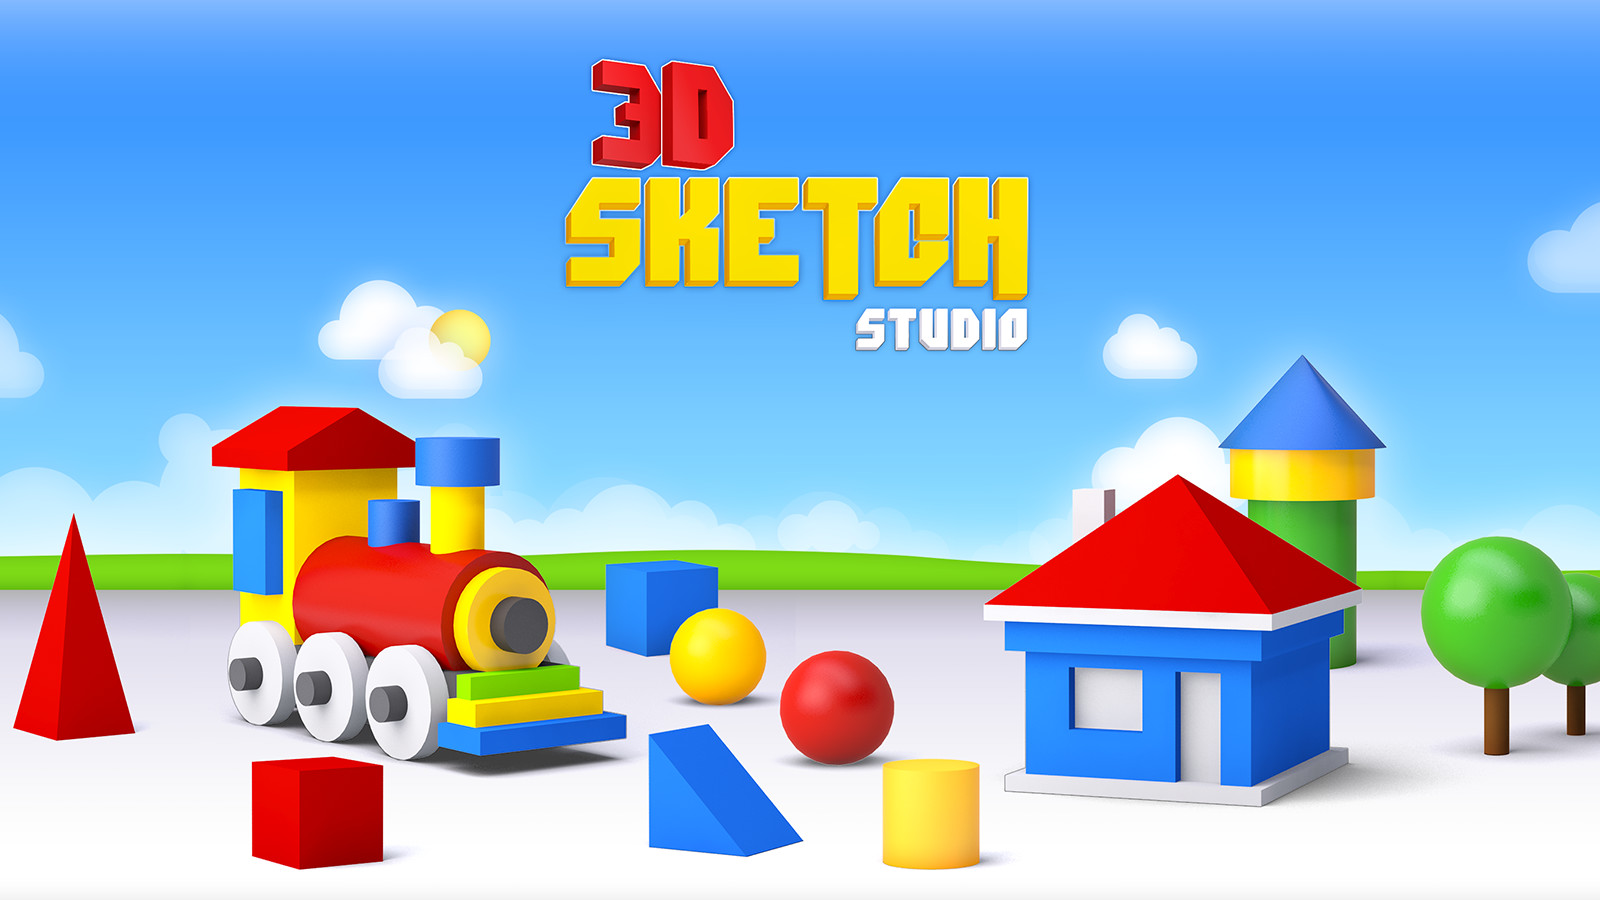 3D Sketch Studio